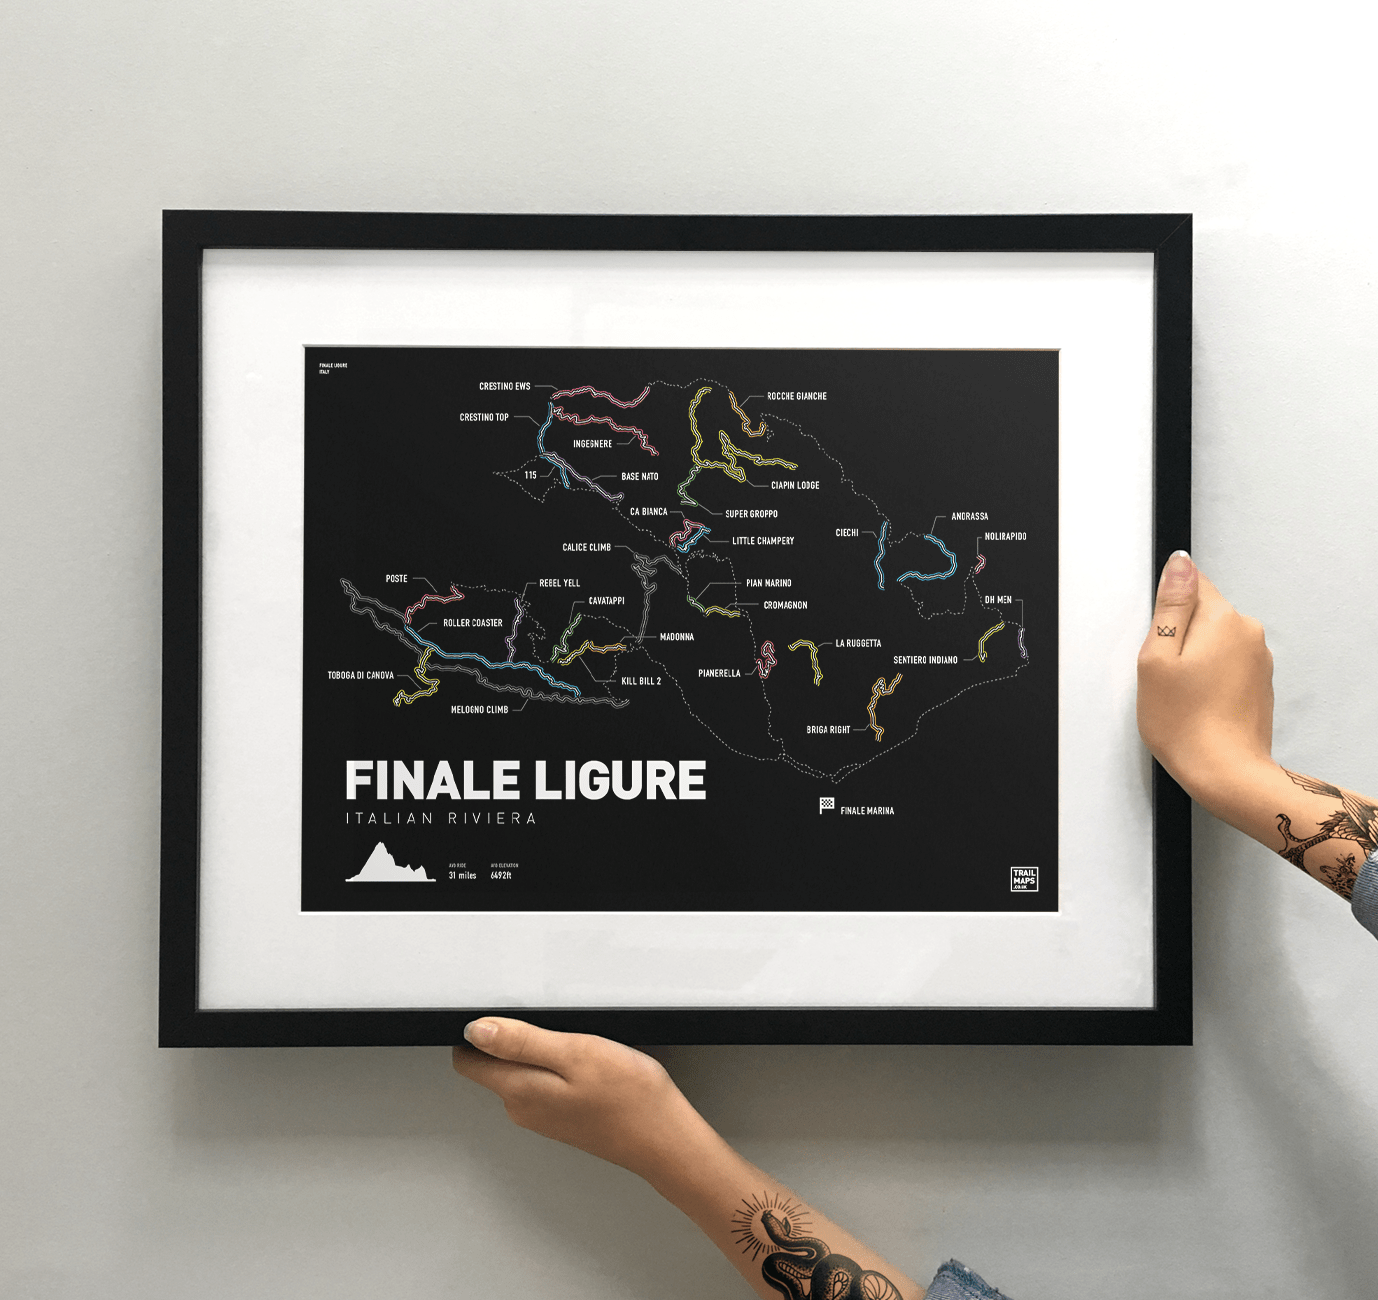 Finale Ligure Art Print - TrailMaps.co.uk